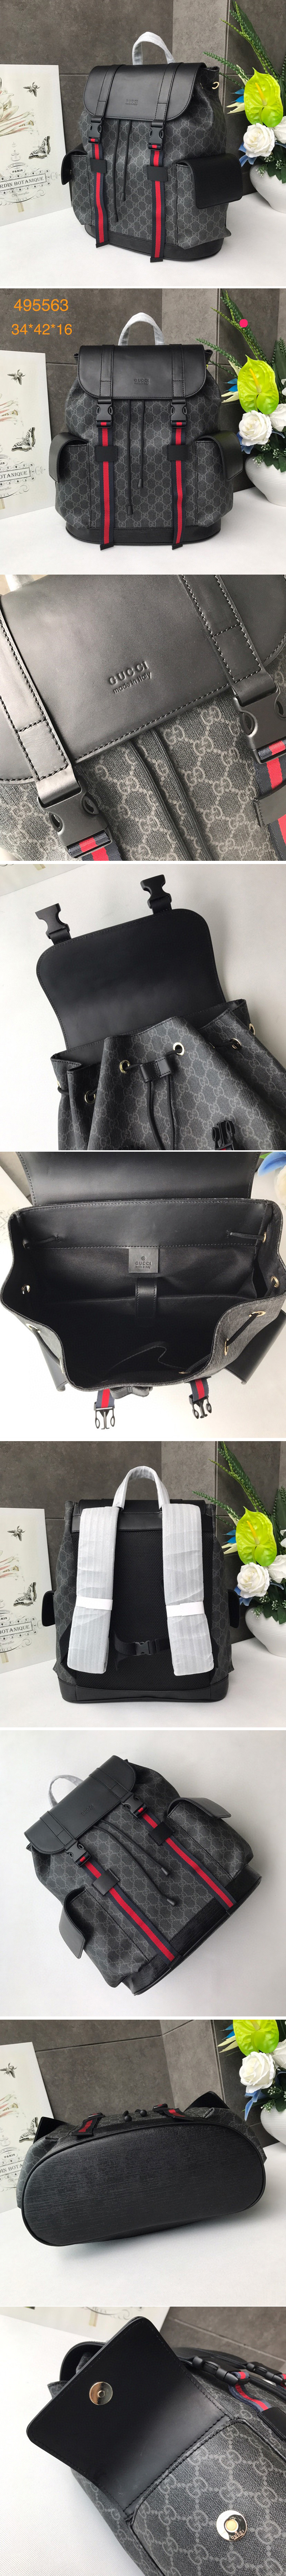 Replica Gucci 495563 GG Black backpack Black/grey soft GG Supreme